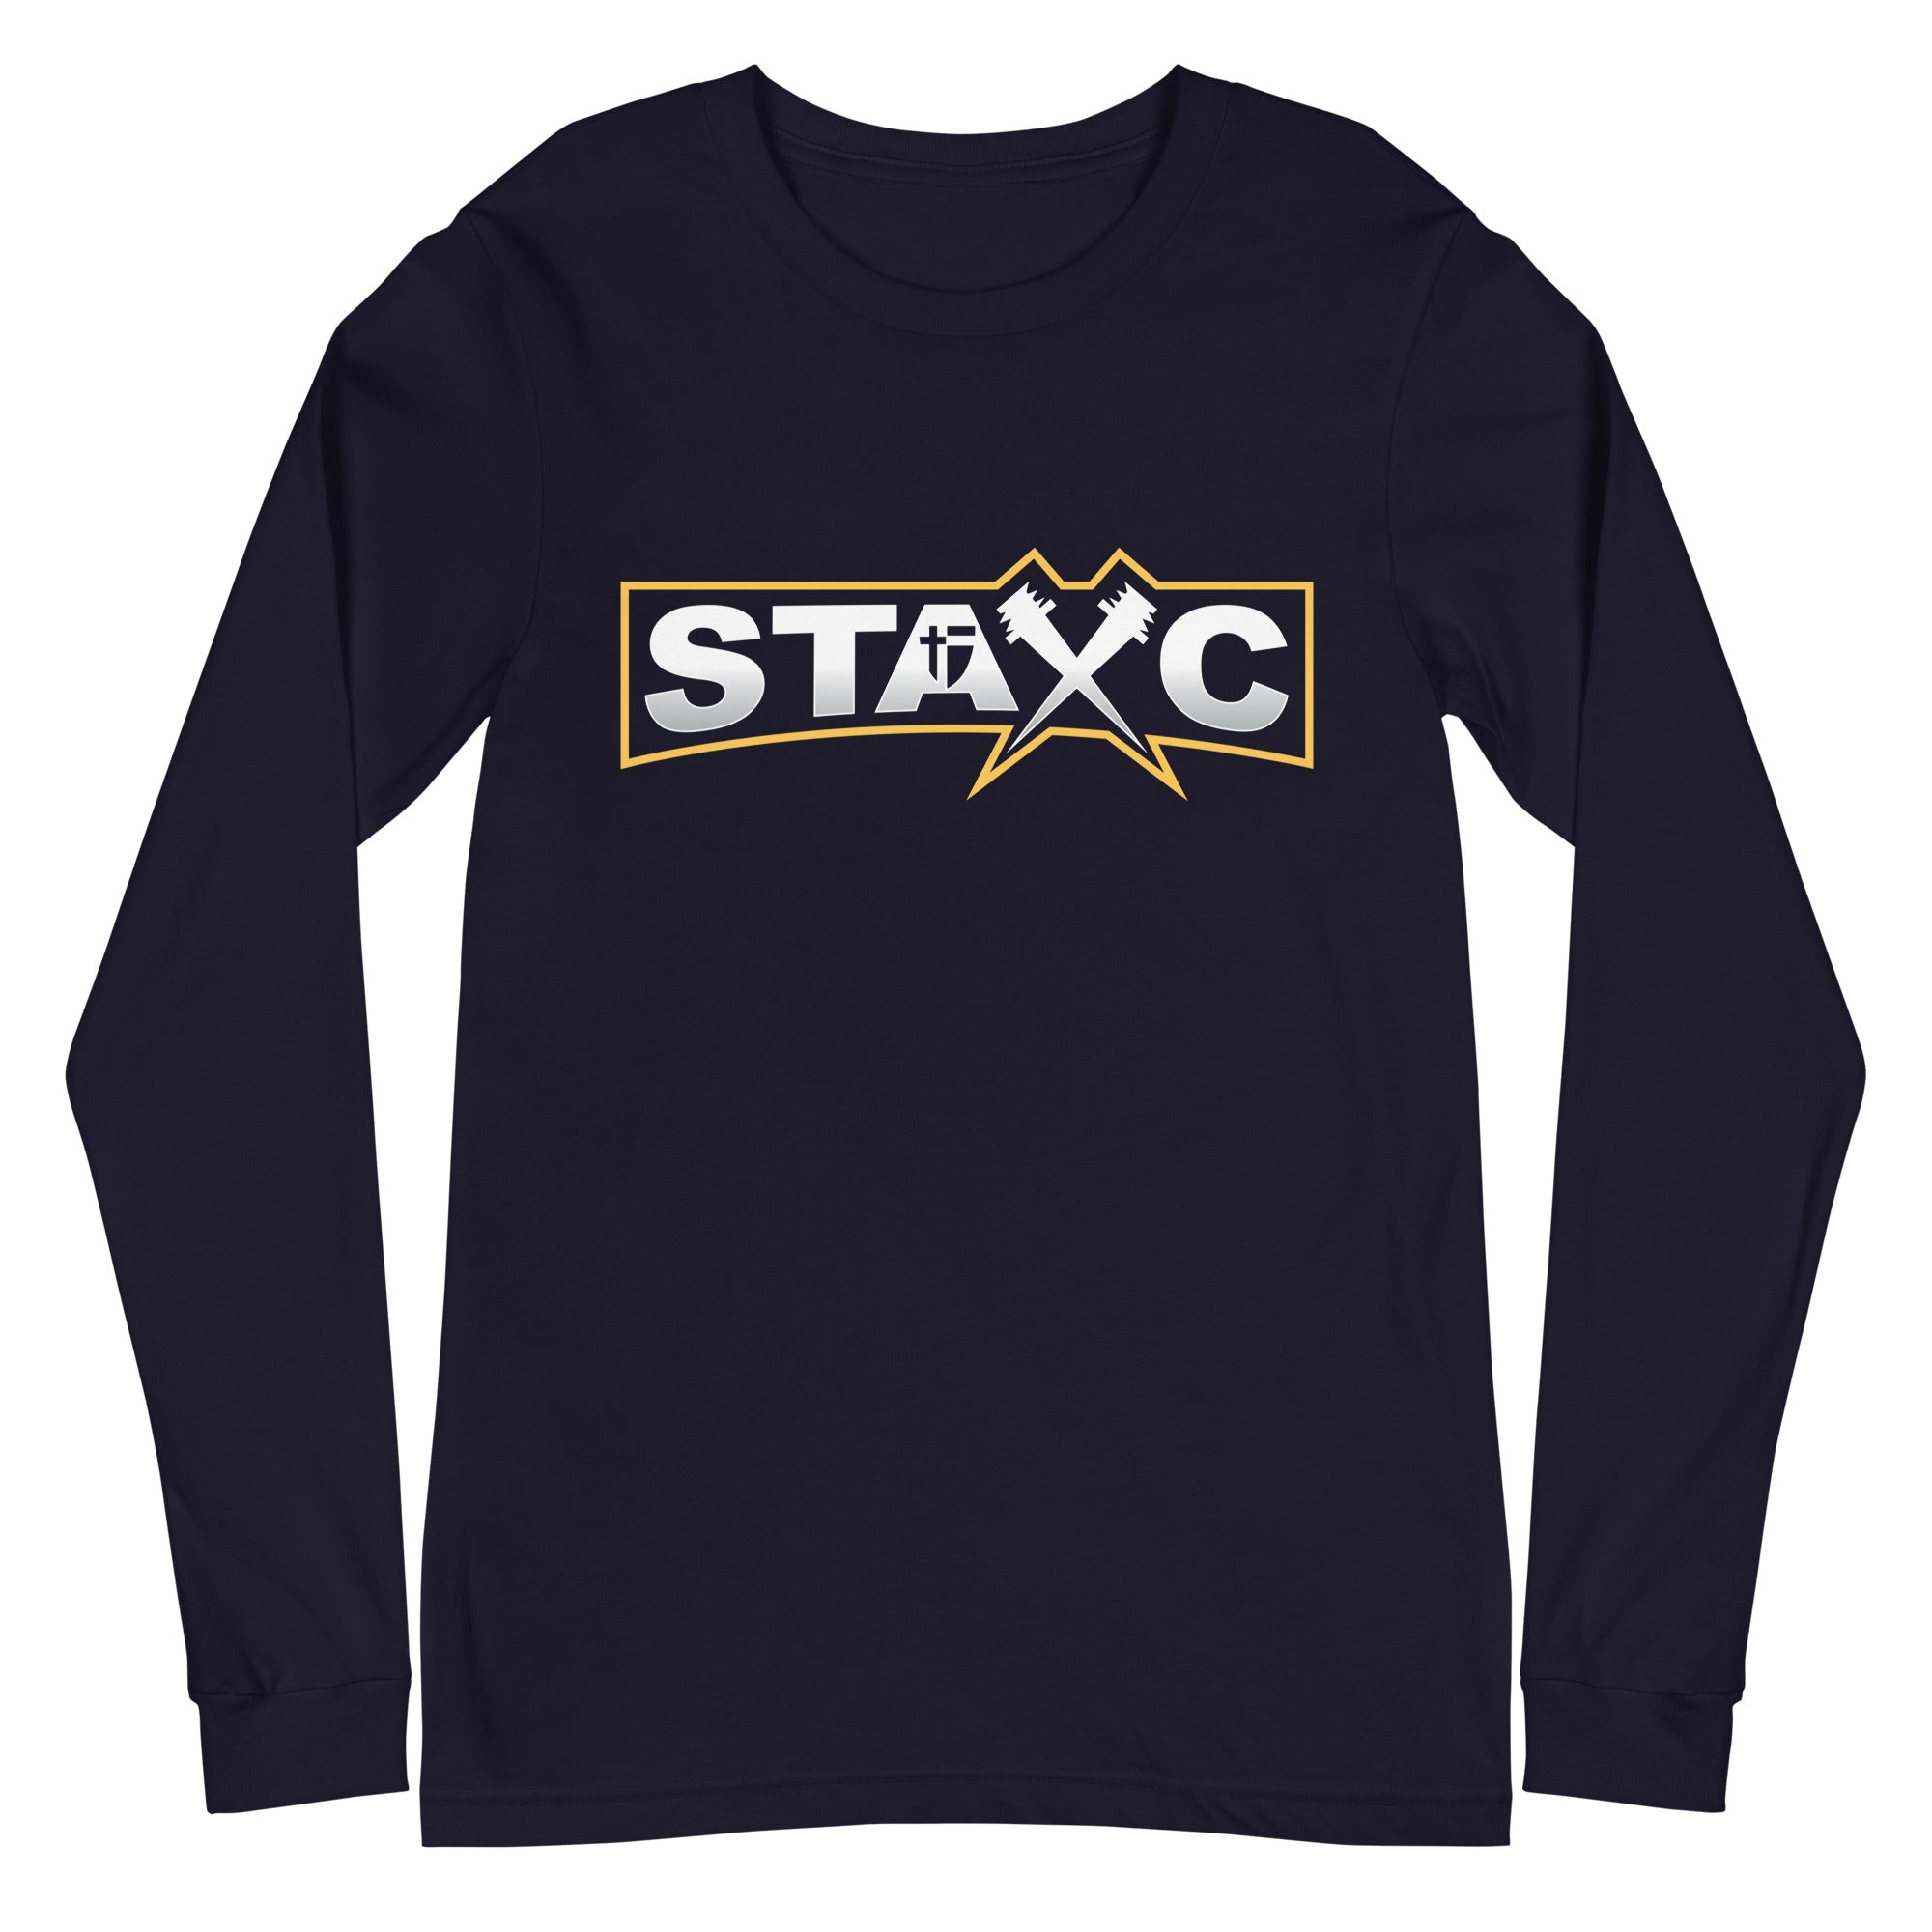 STAXC (Navy Version) Unisex Long Sleeve Tee